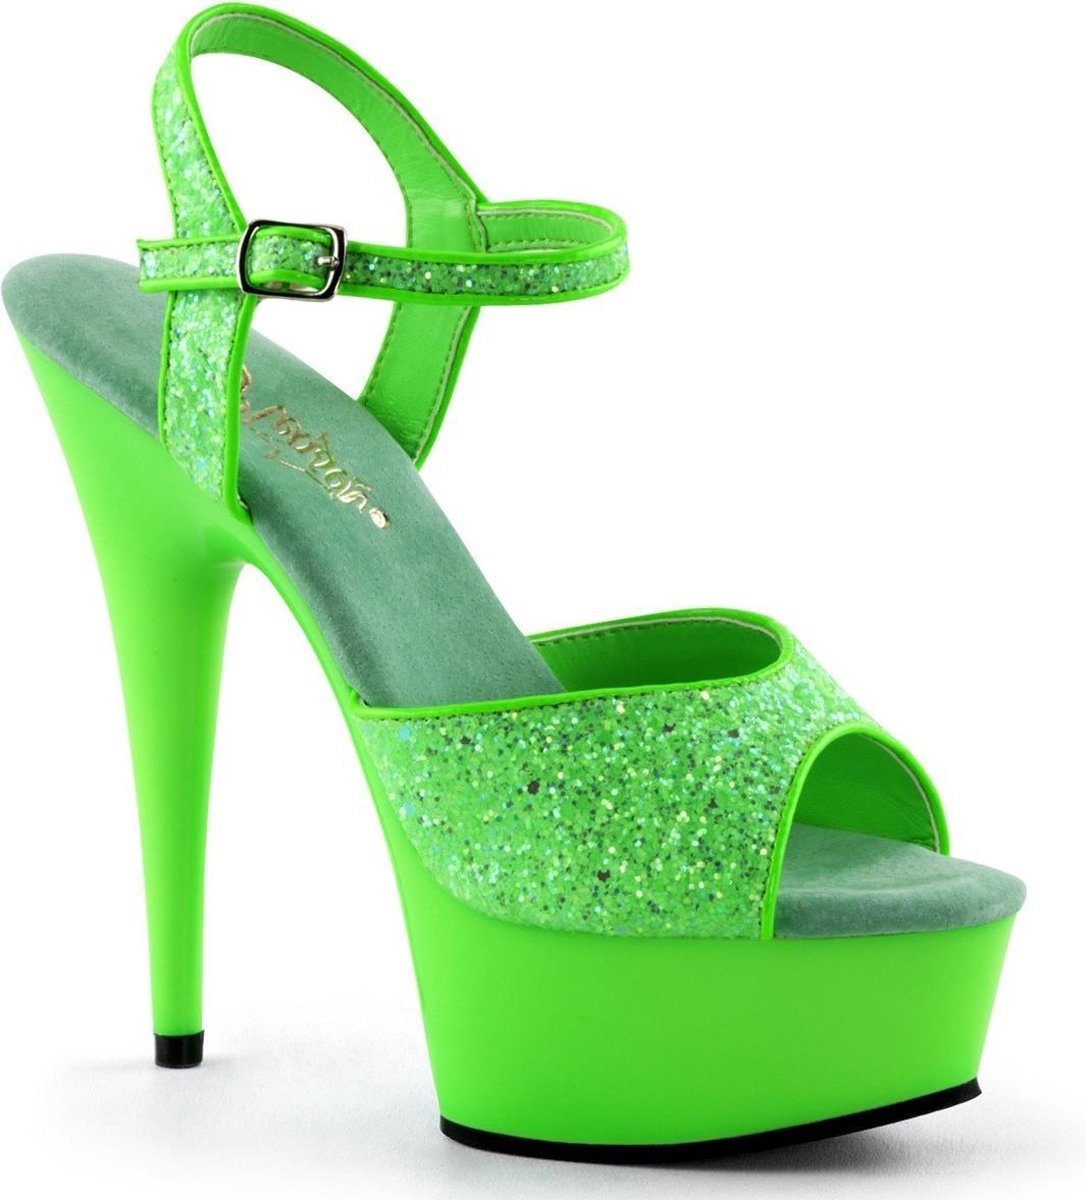 Neon groene glitter sandalen Caydence 40 - Merkloos